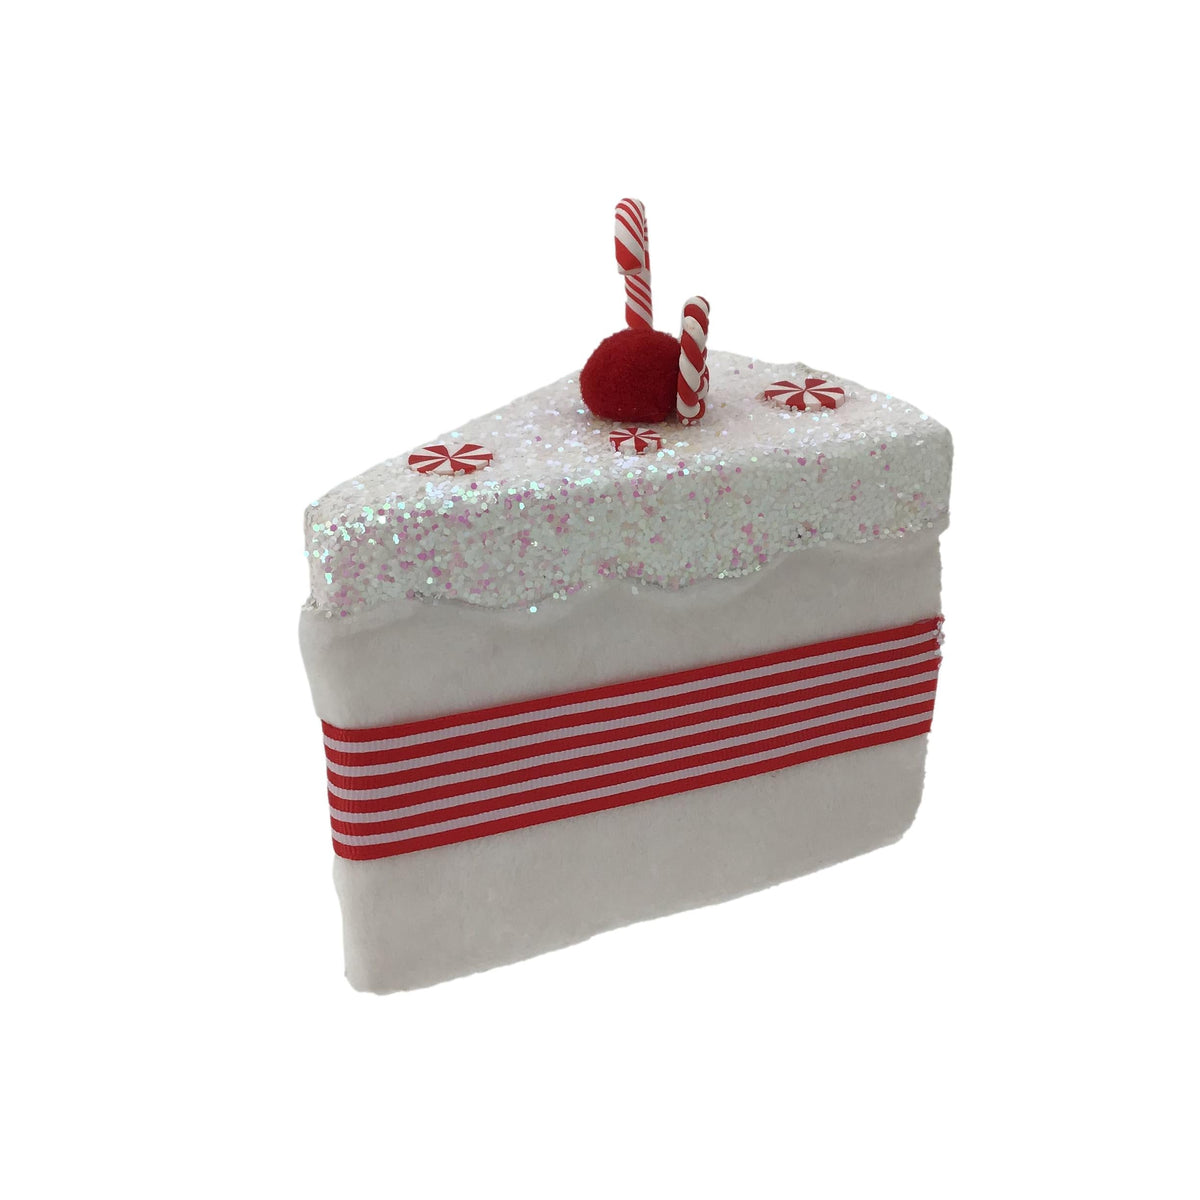 Red &amp; White Cake Slice - My Christmas